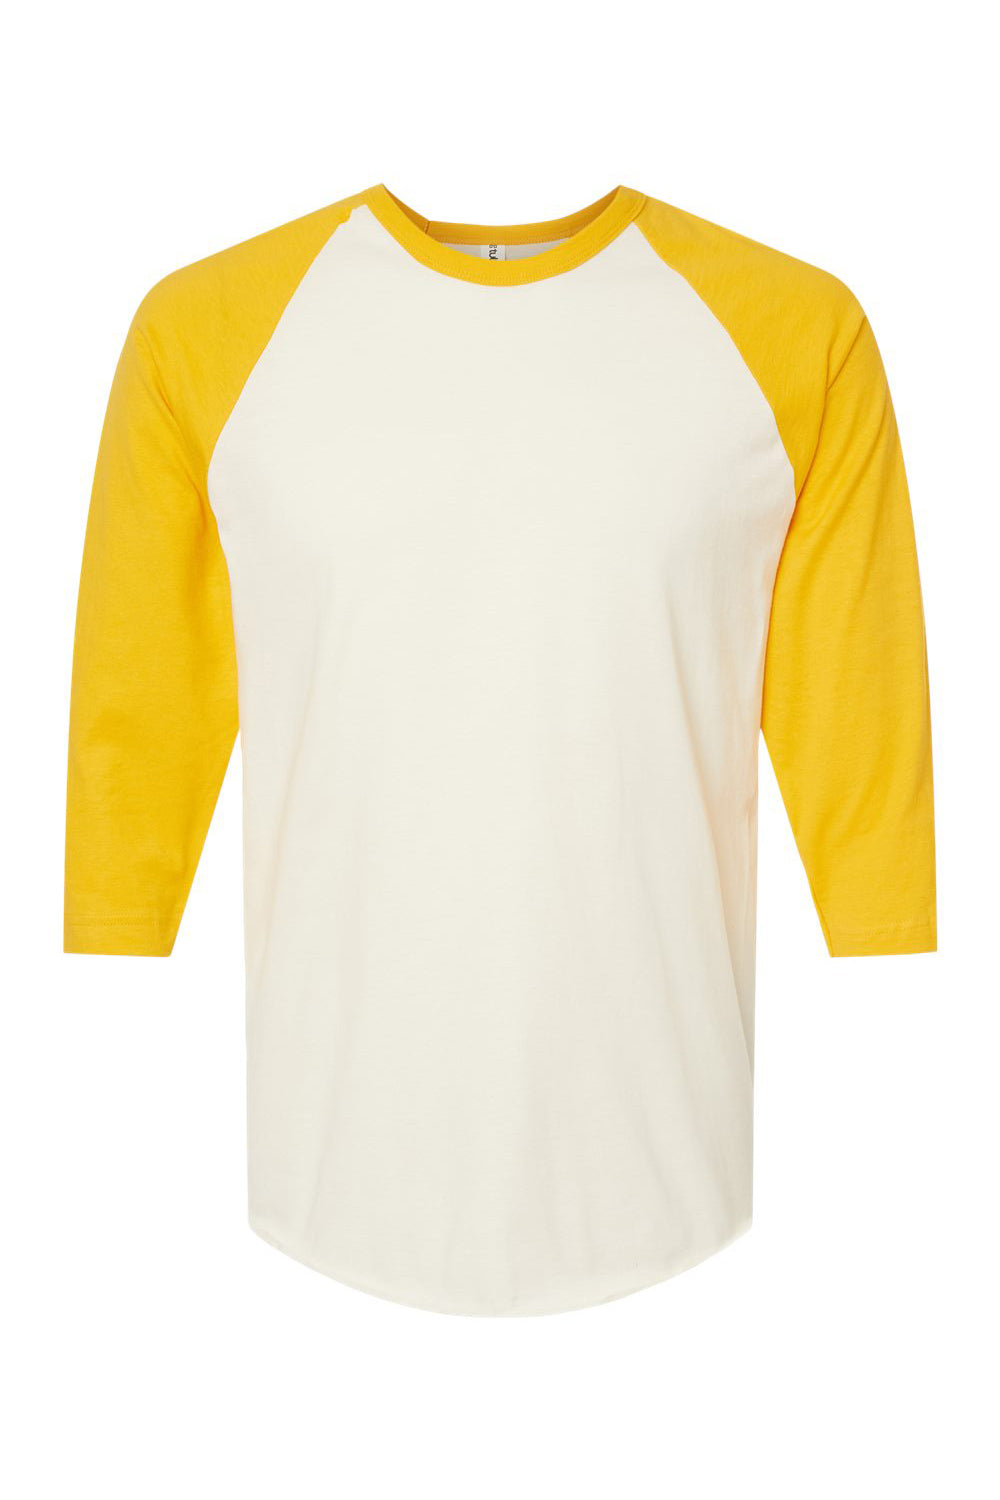 Tultex 245 Mens Fine Jersey Raglan 3/4 Sleeve Crewneck T-Shirt Vintage White/Mellow Yellow Flat Front